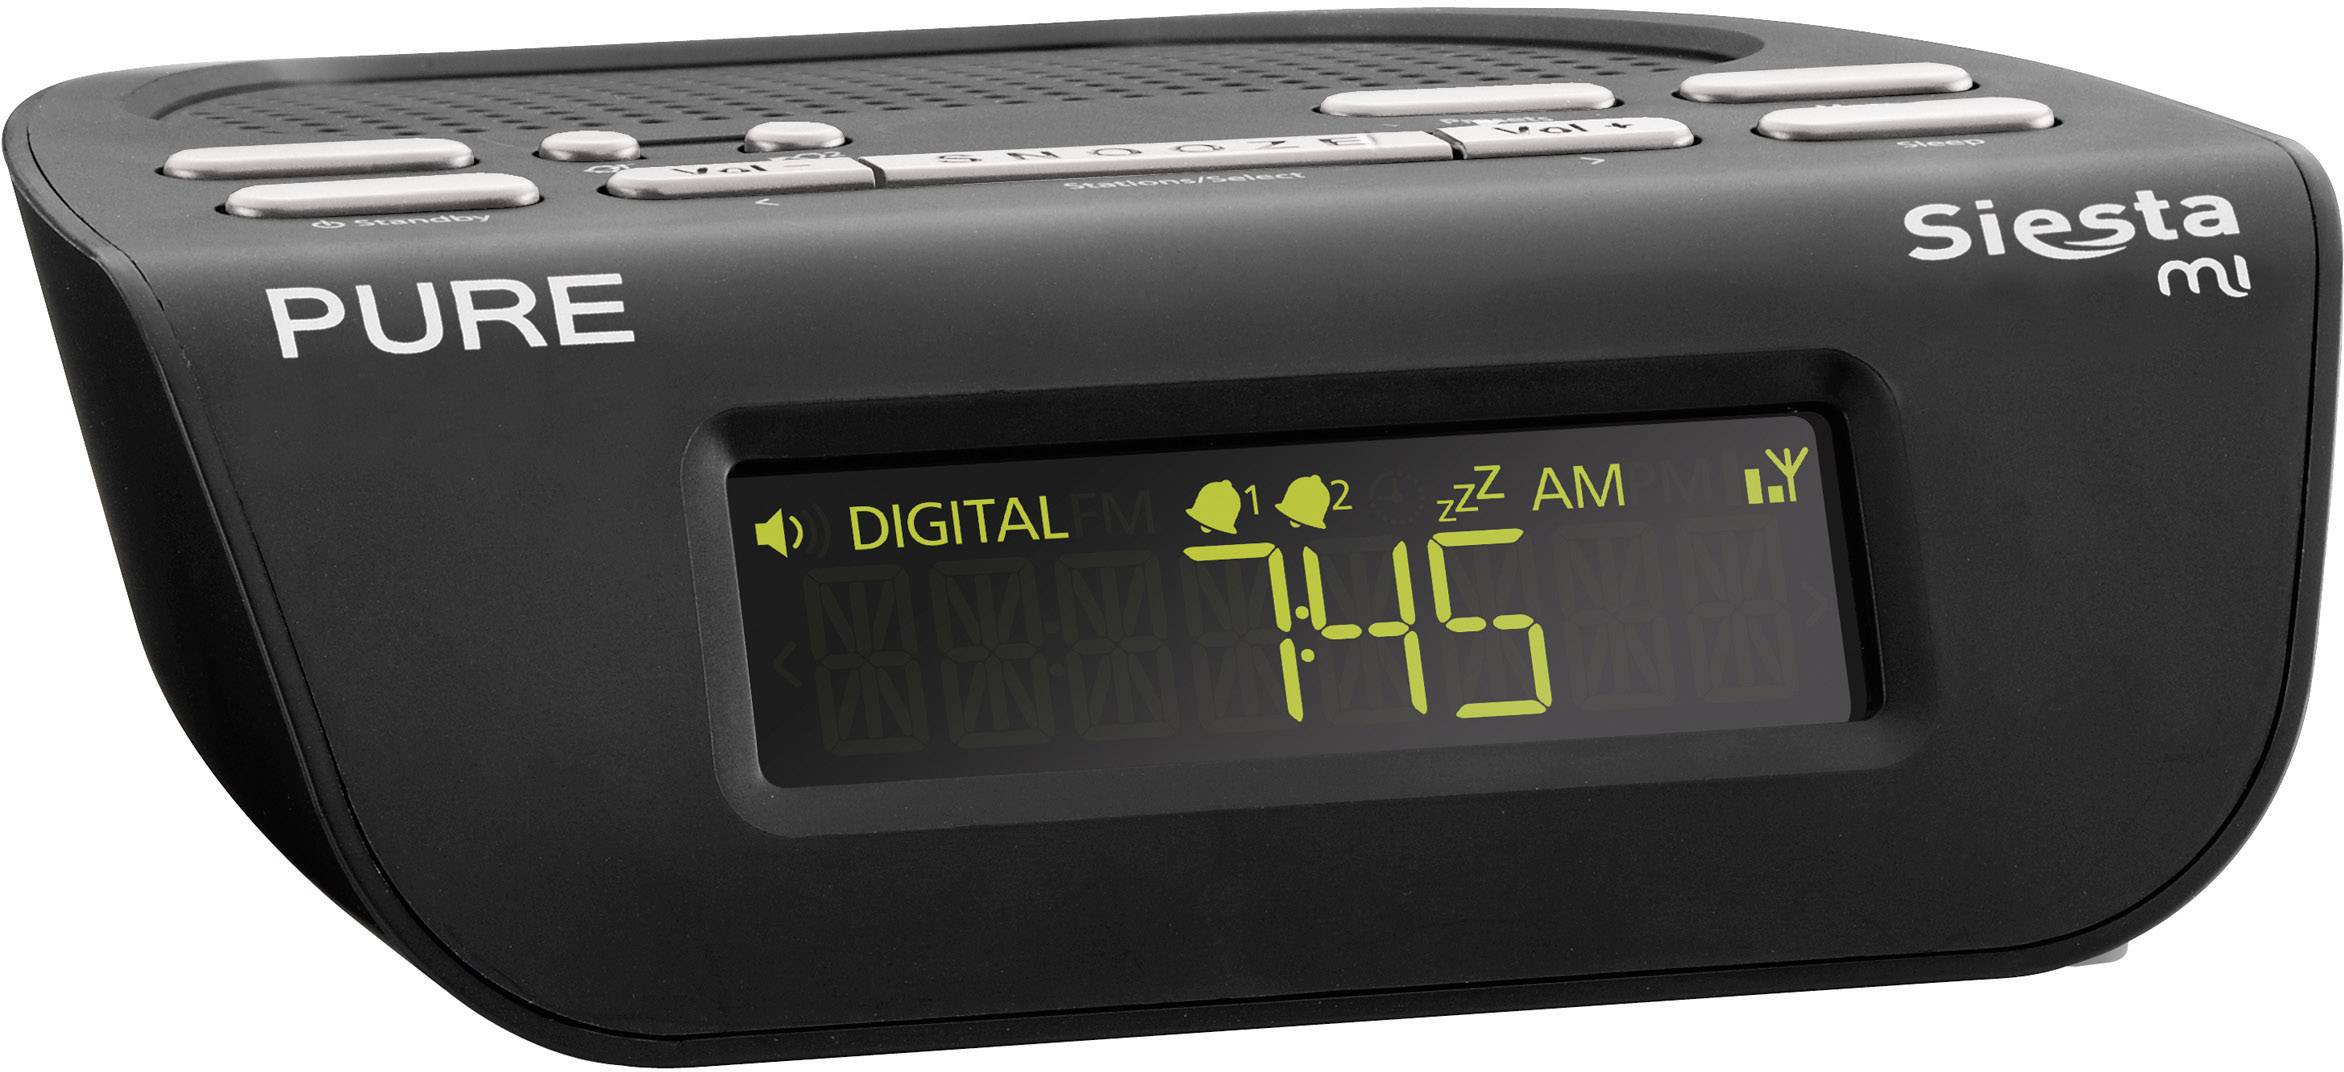 pure siesta dab radio alarm clock review